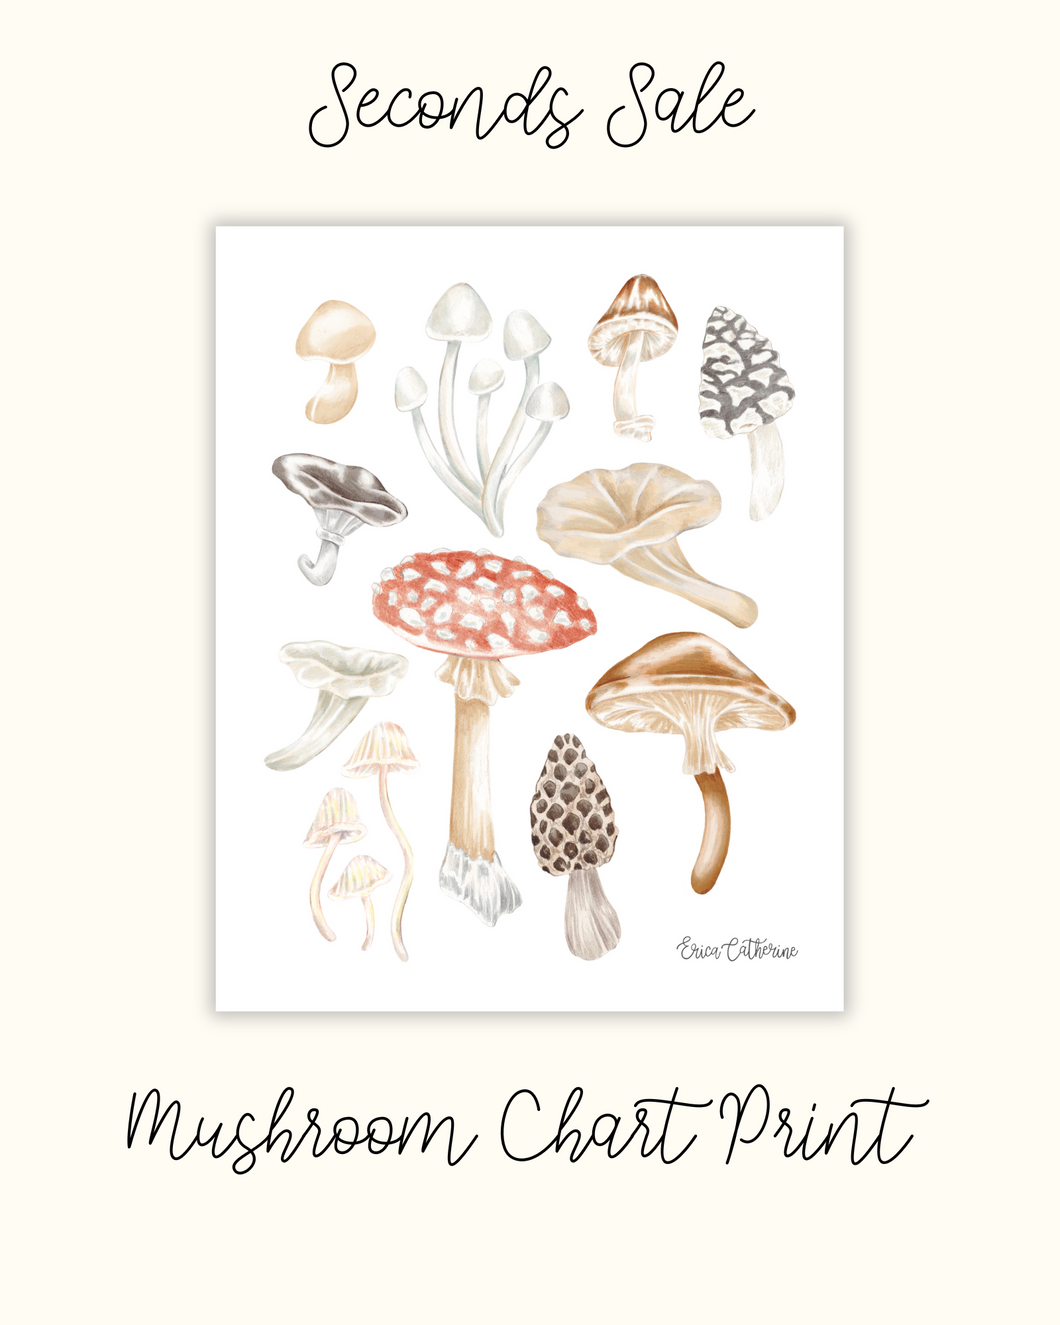 Mushroom Chart Print - Seconds Sale